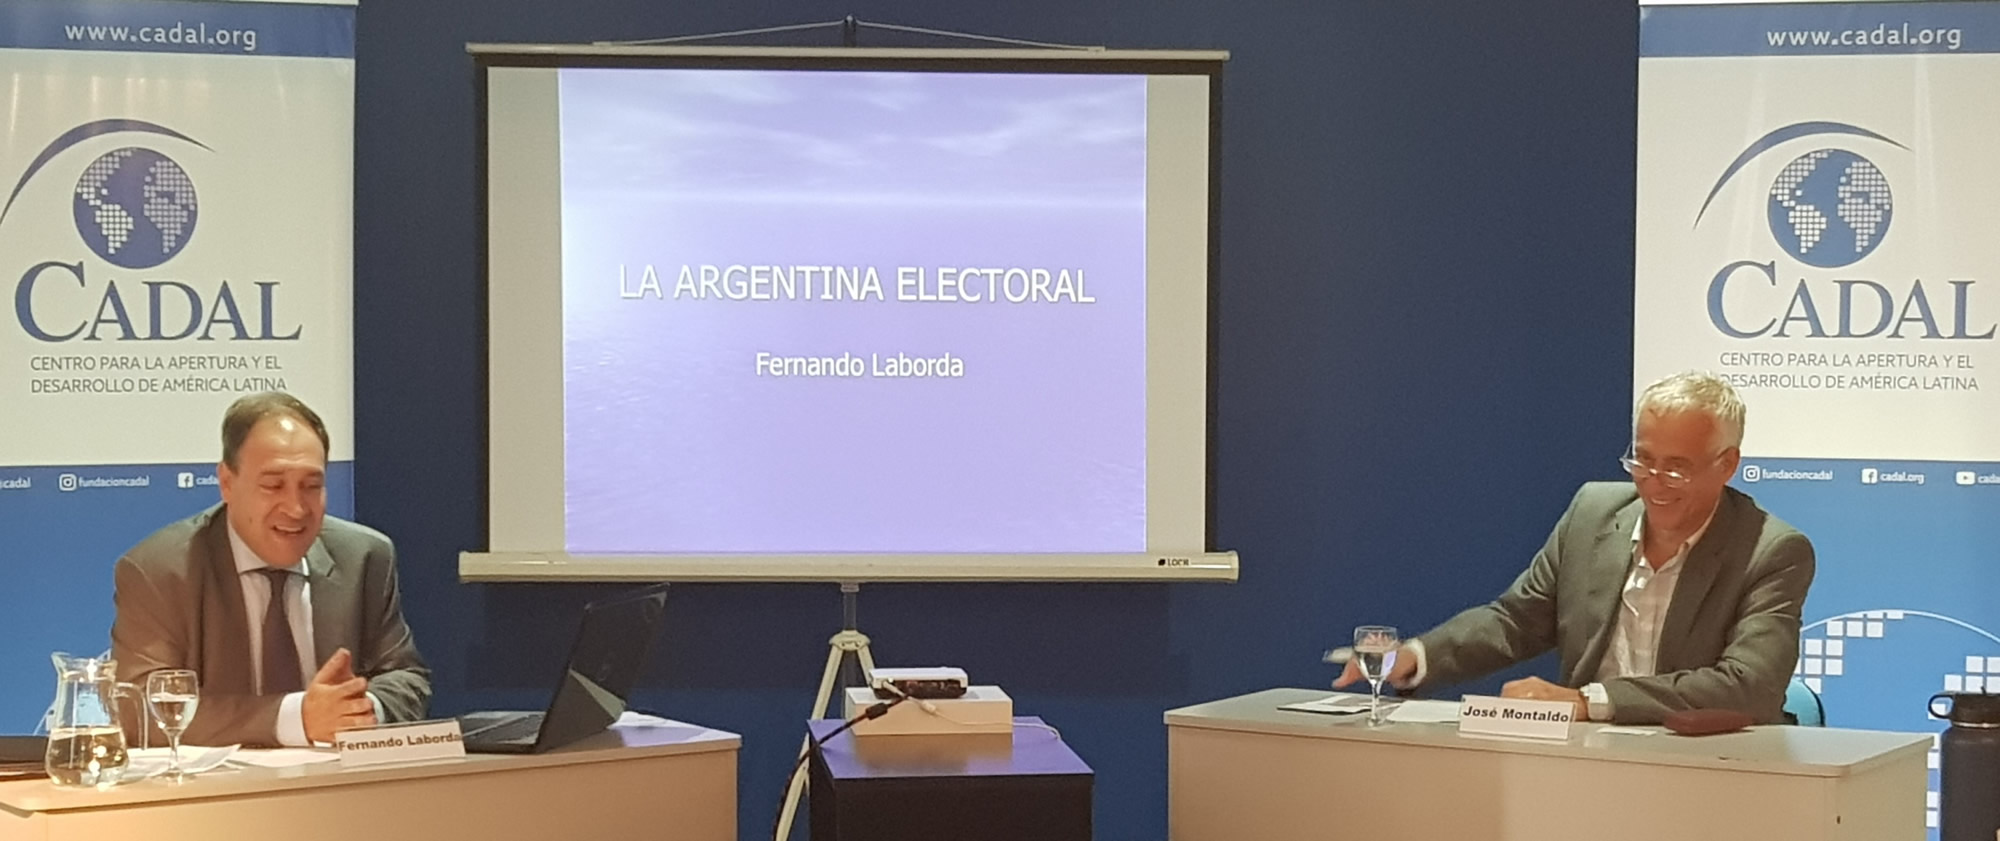 La Argentina electoral